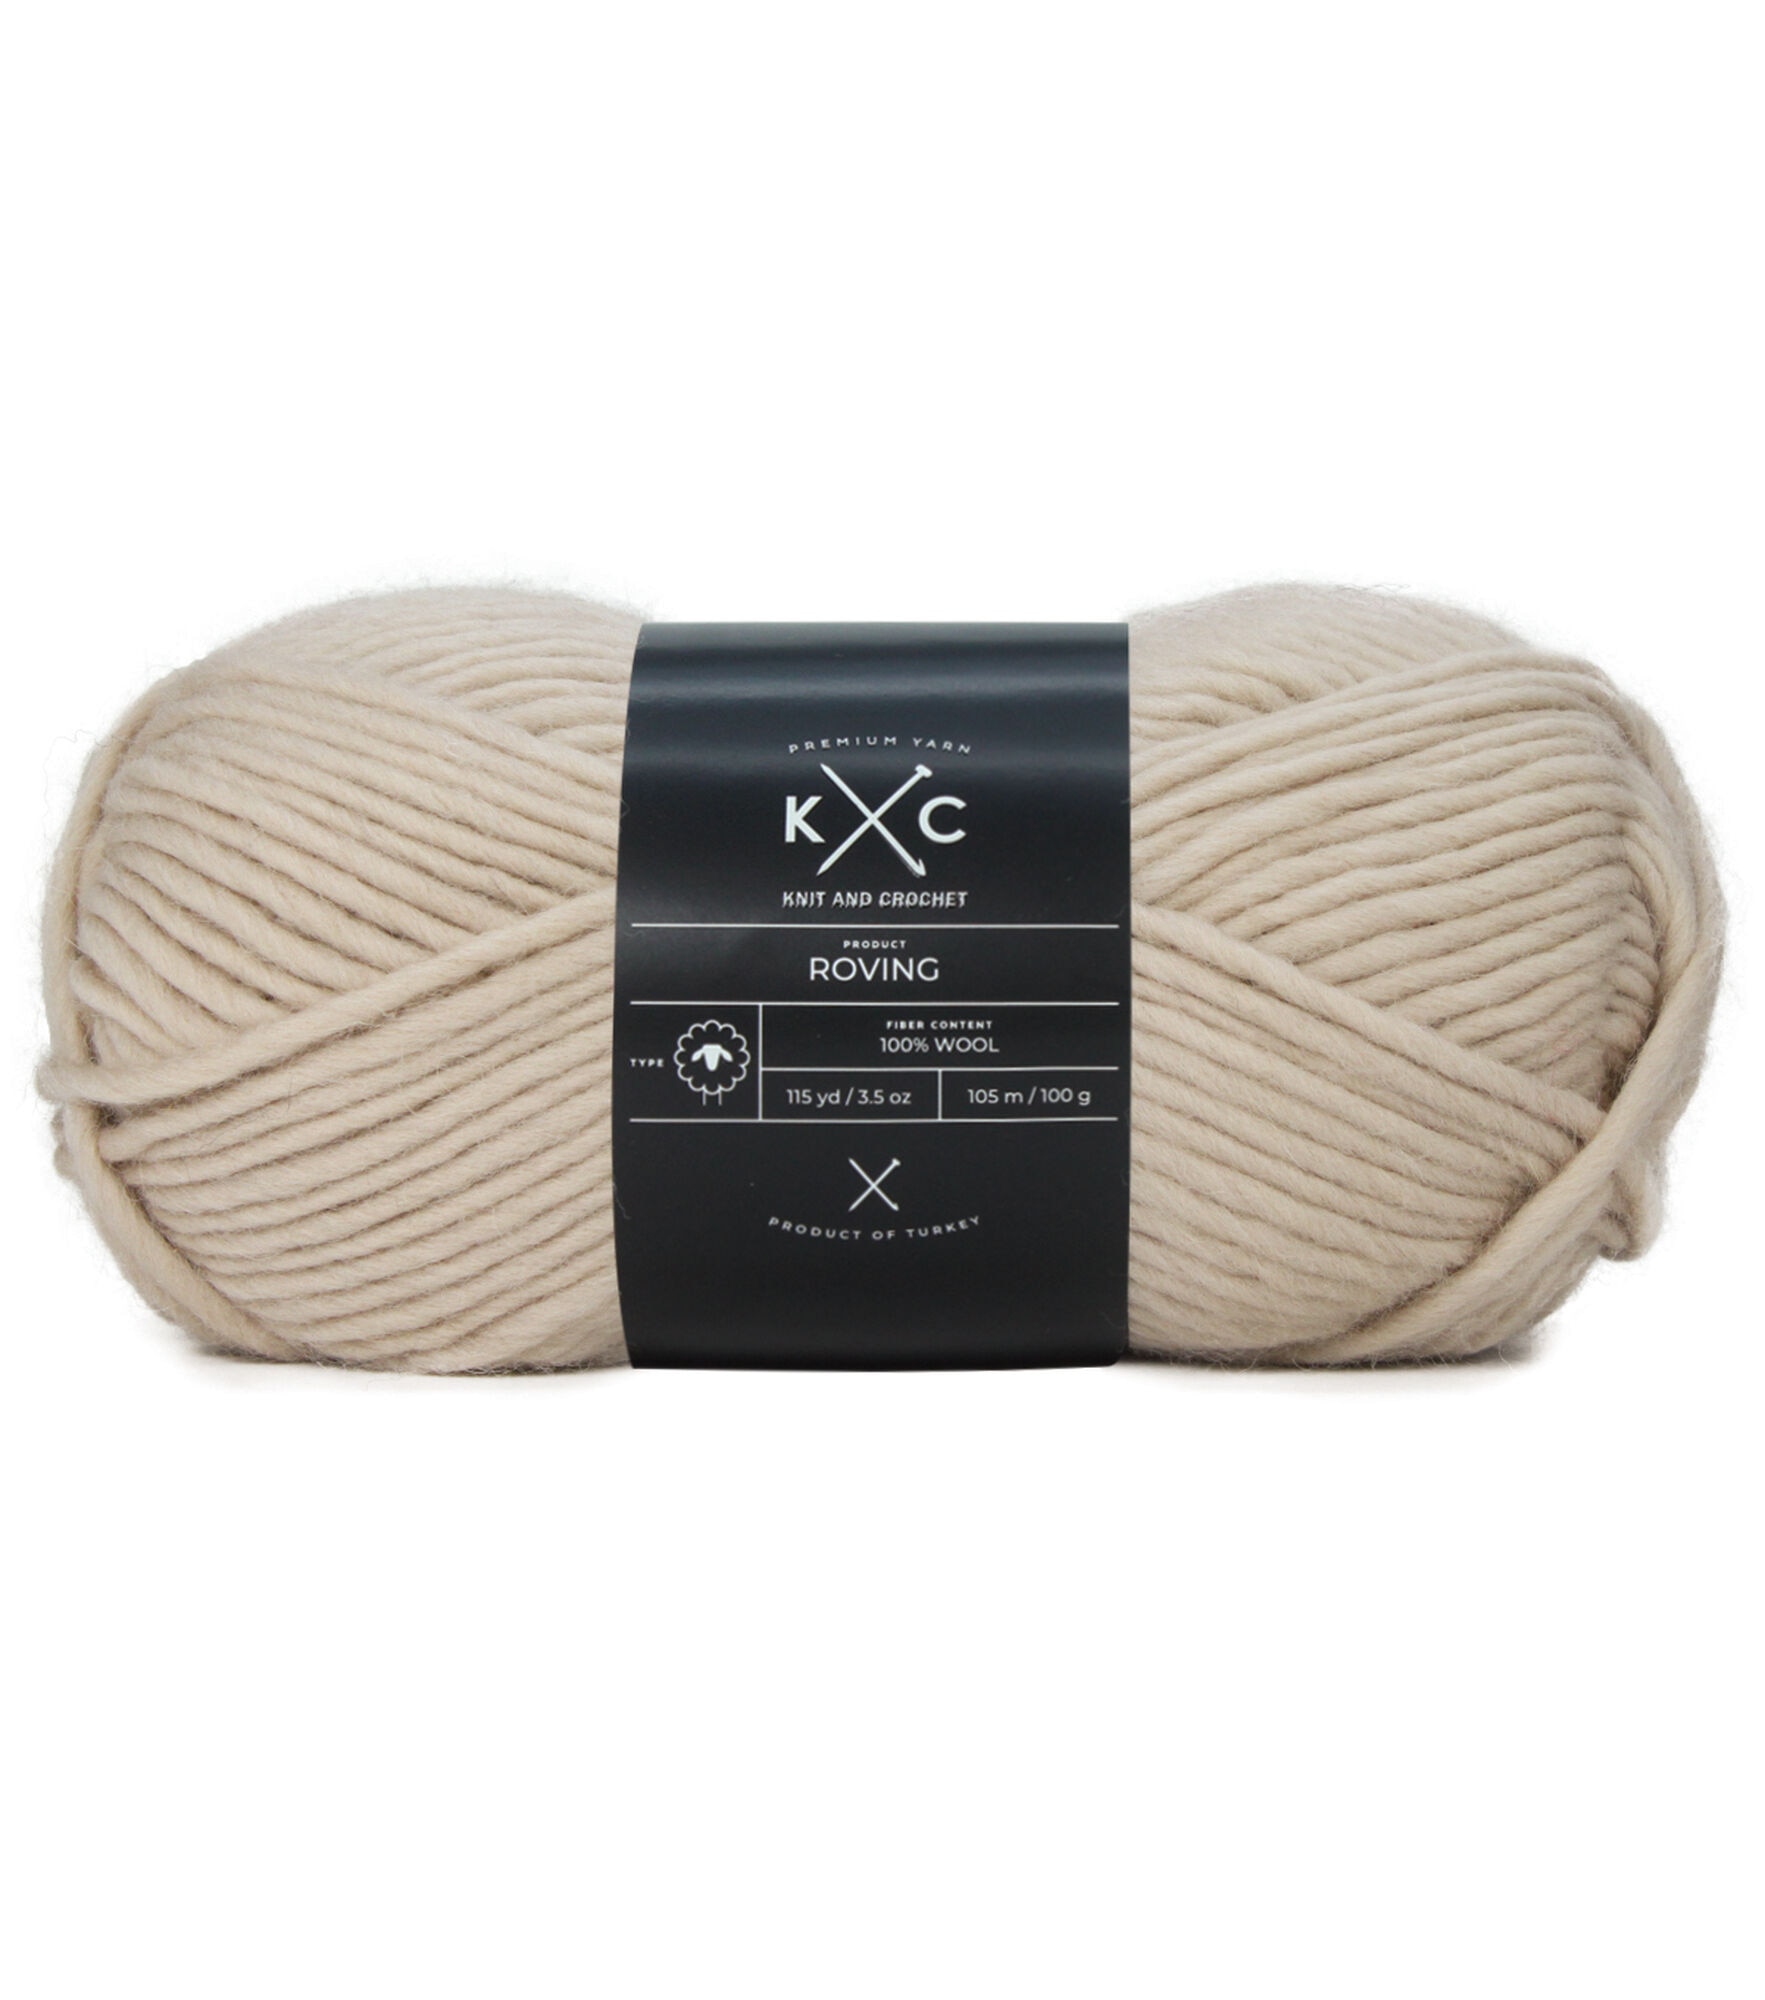 Wool yarn,100% natural, knitting - crochet - craft supplies, dark